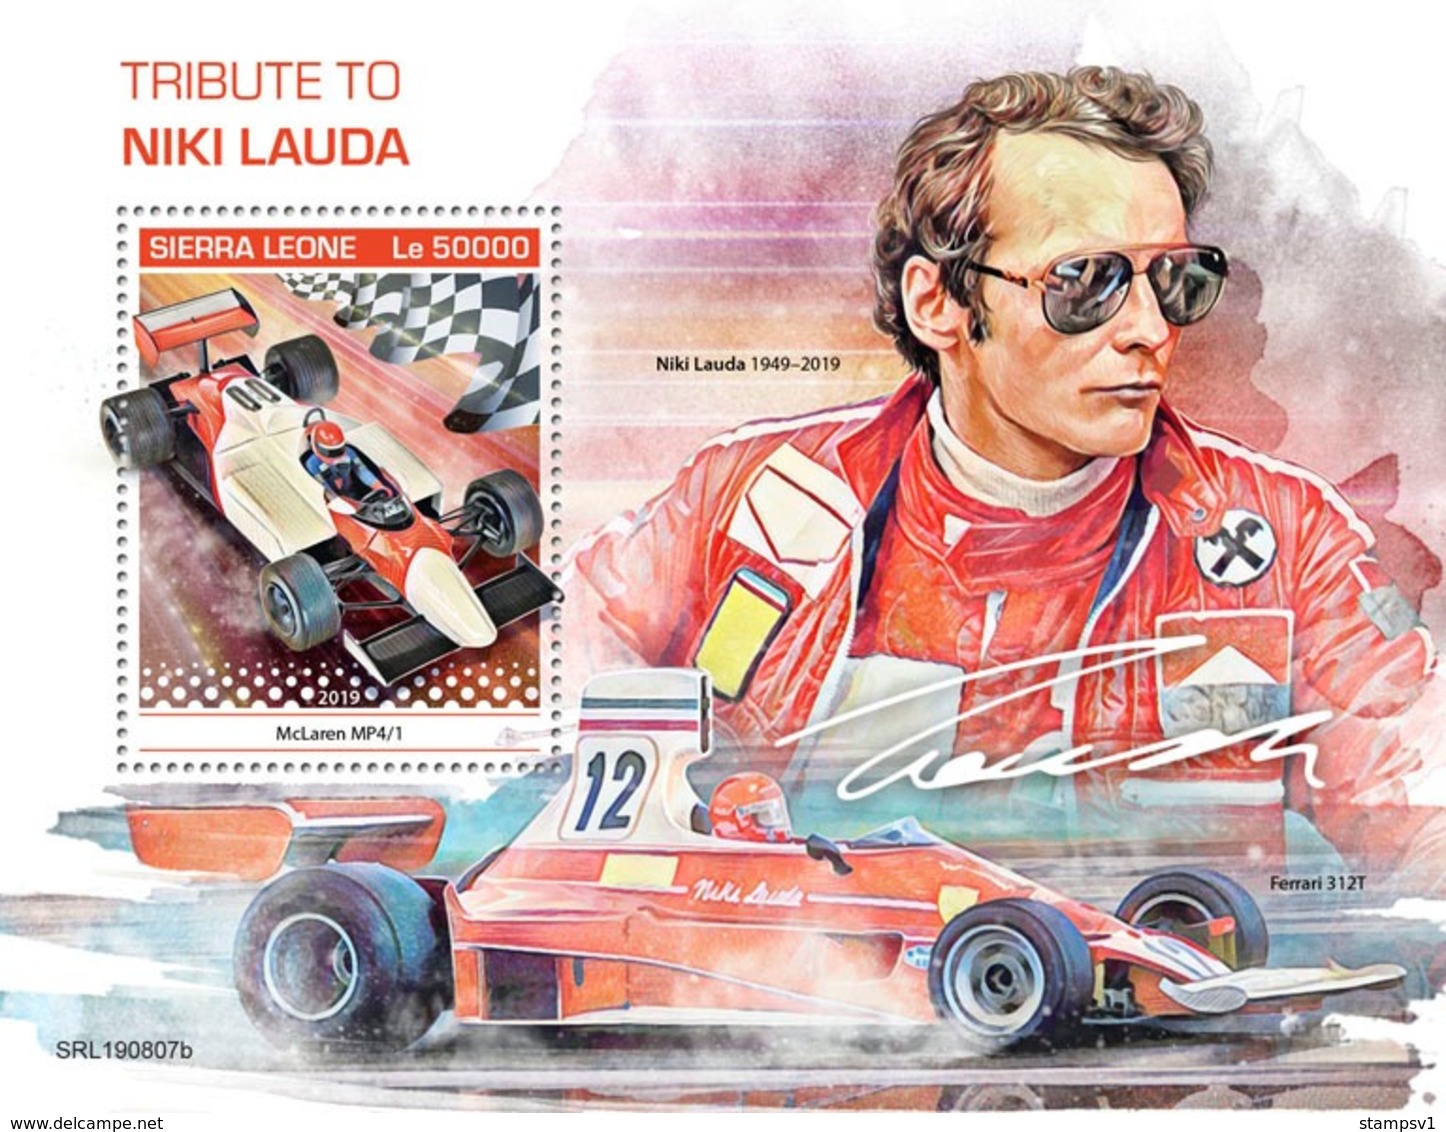 Sierra Leone. 2019 70th Anniversary Of Niki Lauda. (0807b)  OFFICIAL ISSUE - Cars